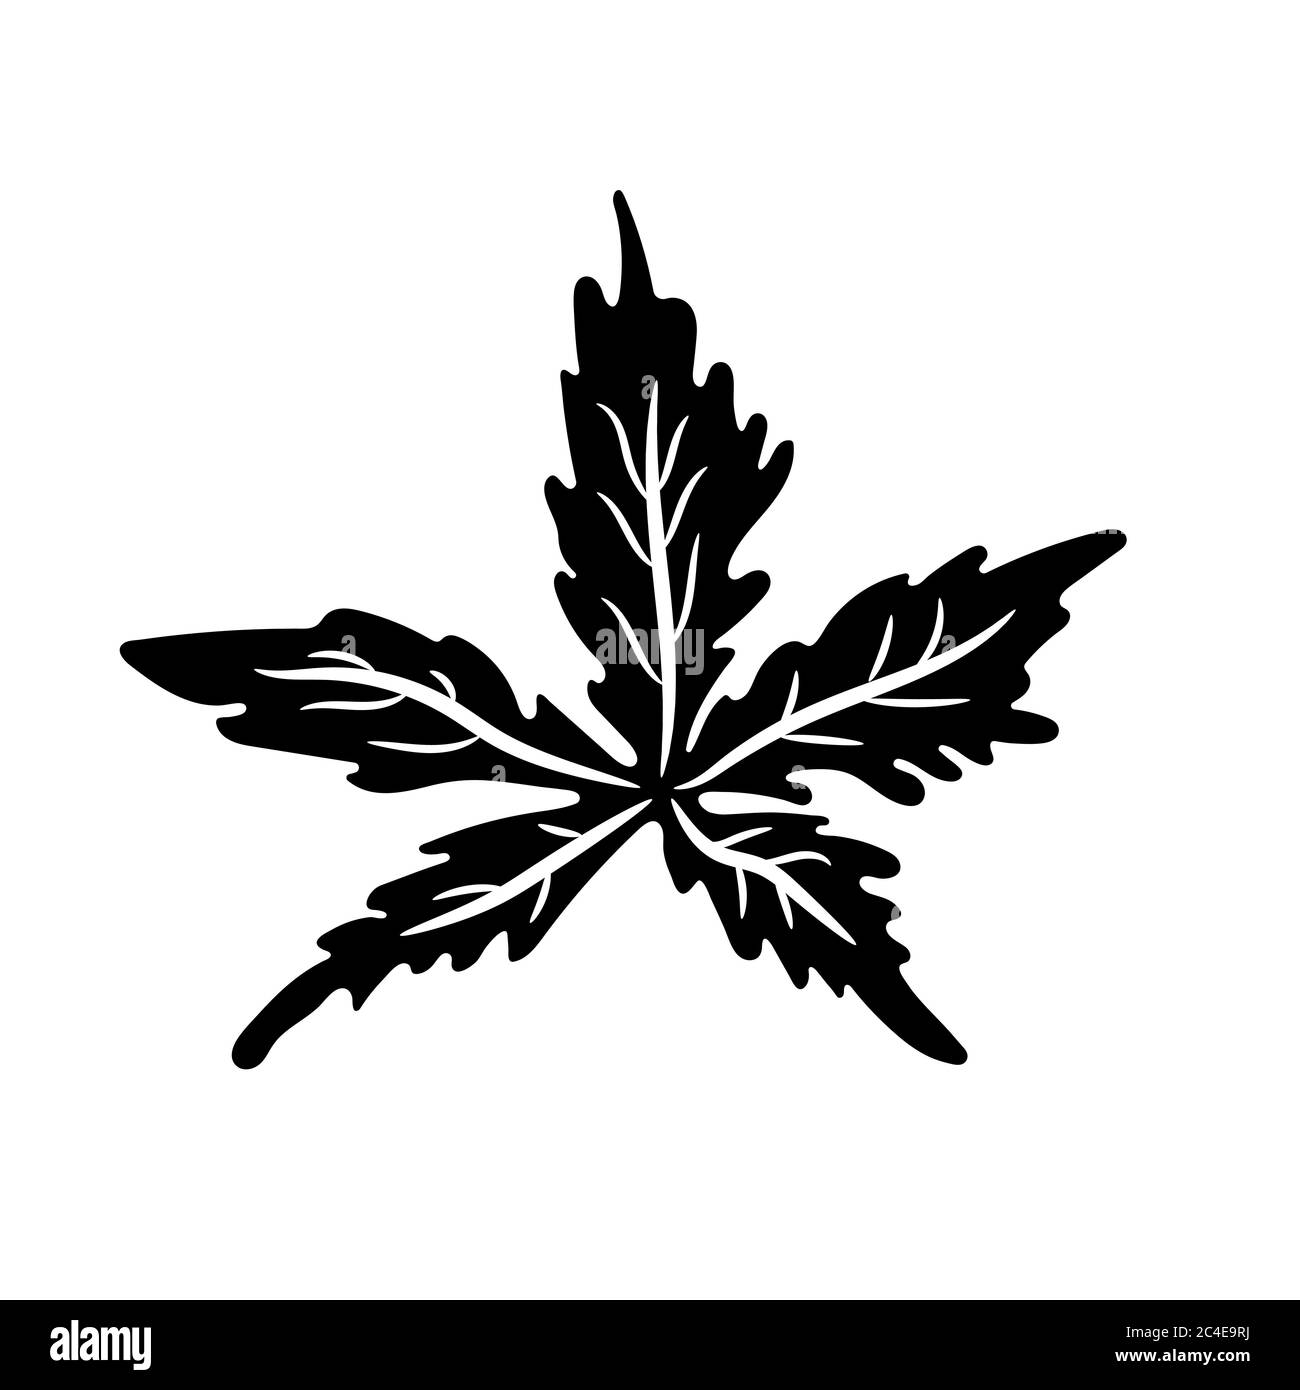 Leaf silhouette. Black geranium pratense leaf isolated on white background. Vector illustration. Stock Vector